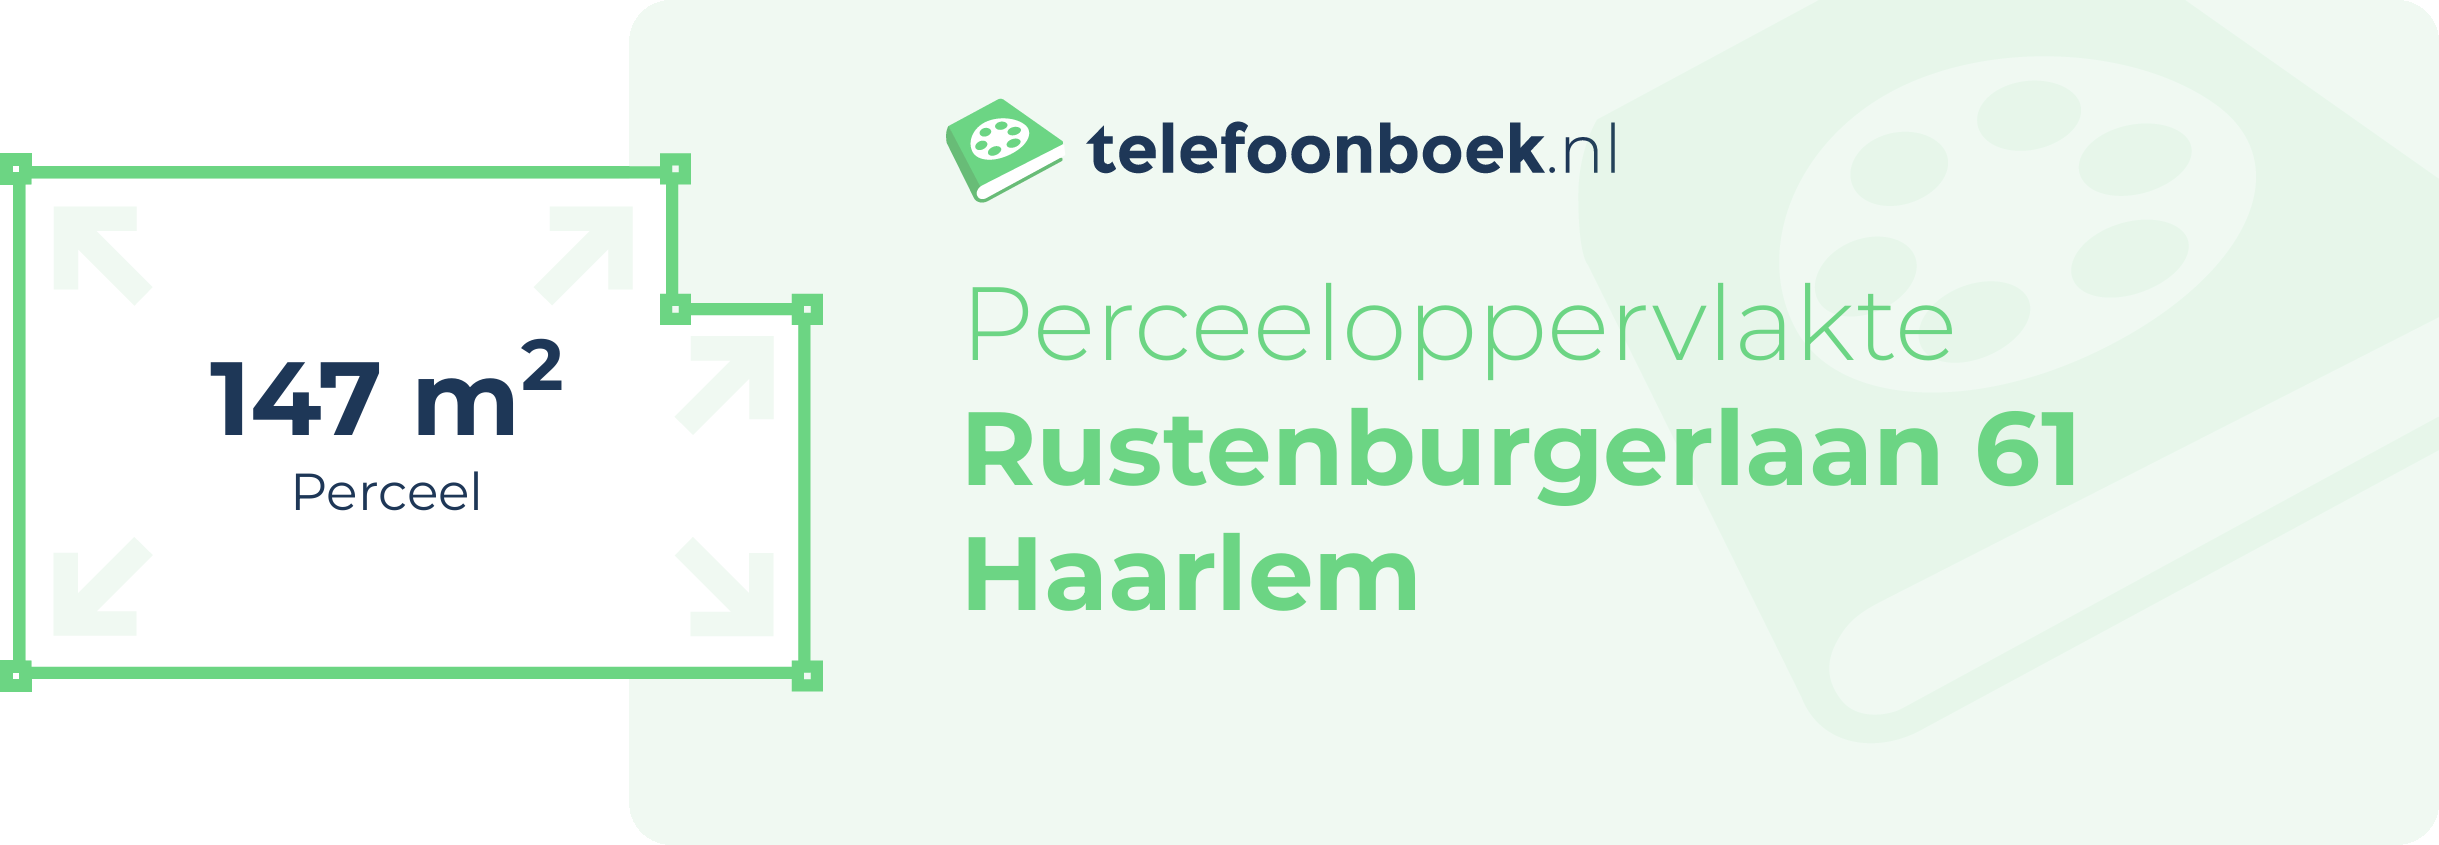 Perceeloppervlakte Rustenburgerlaan 61 Haarlem